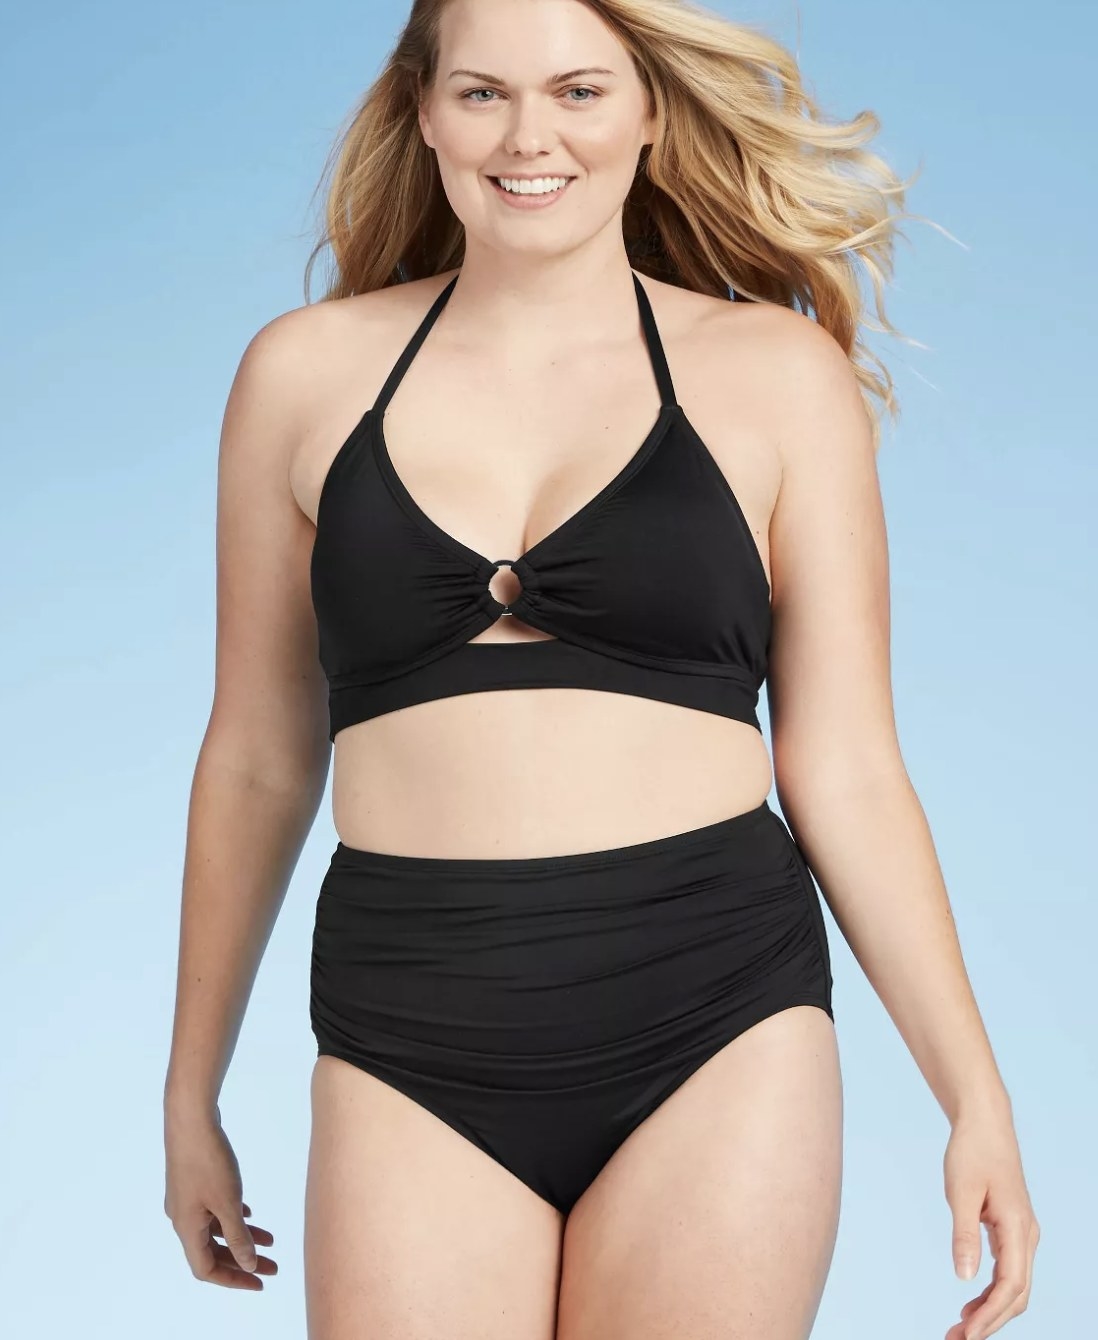 Model wearing the bikini bottom in black